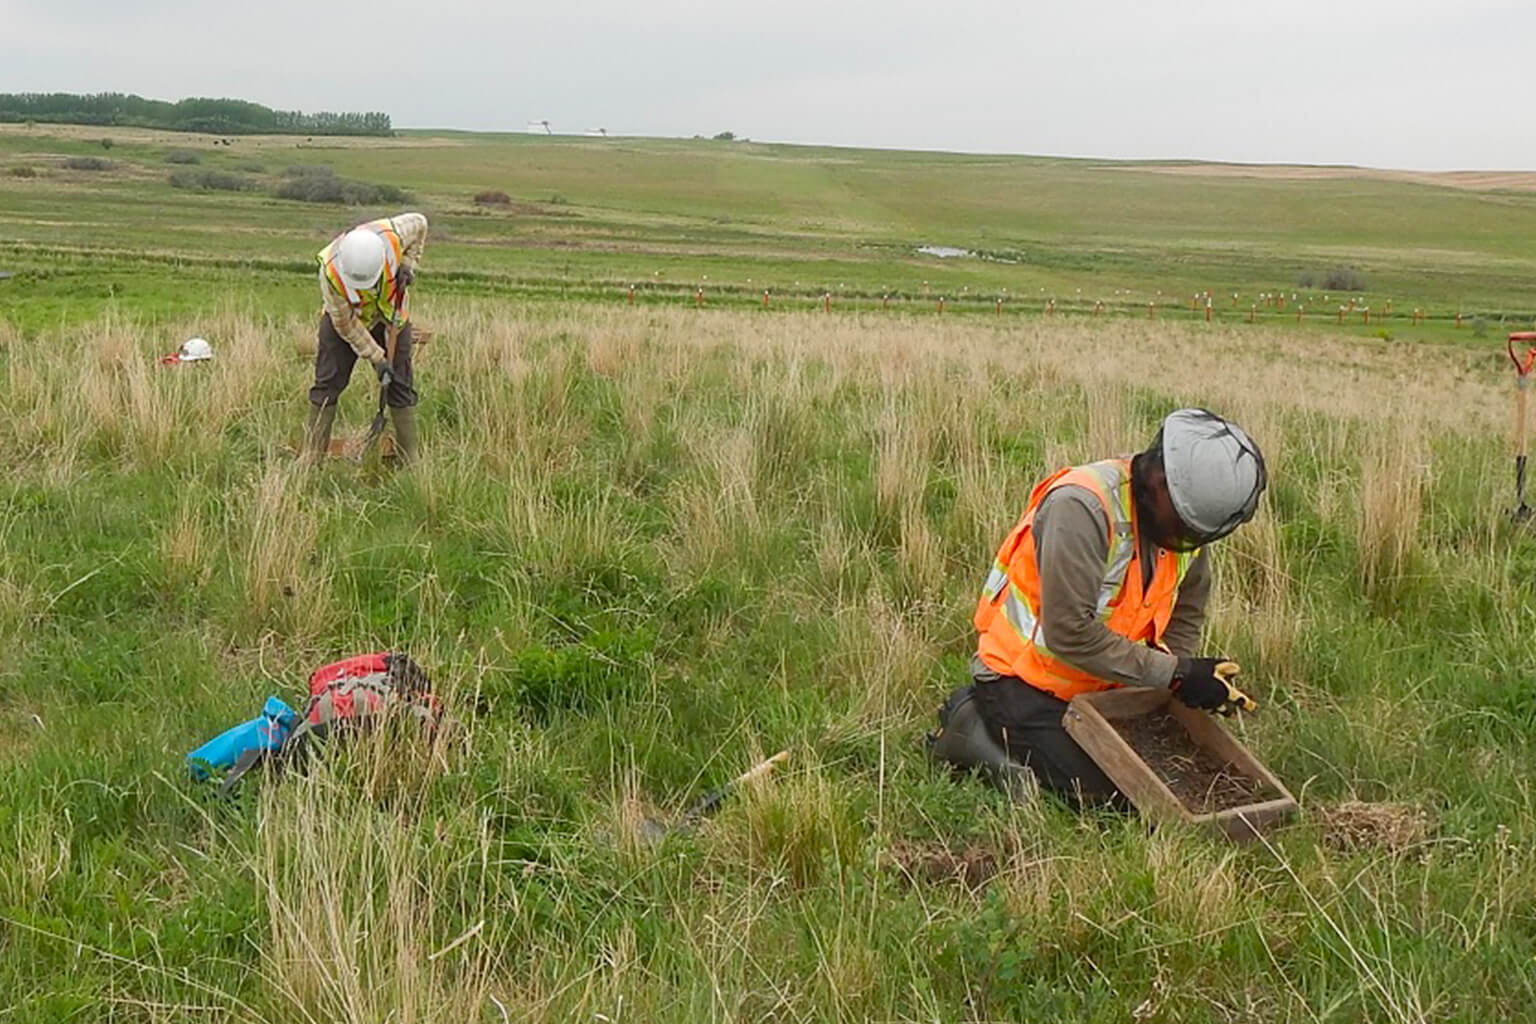 Enbridge employees collecting soil samples